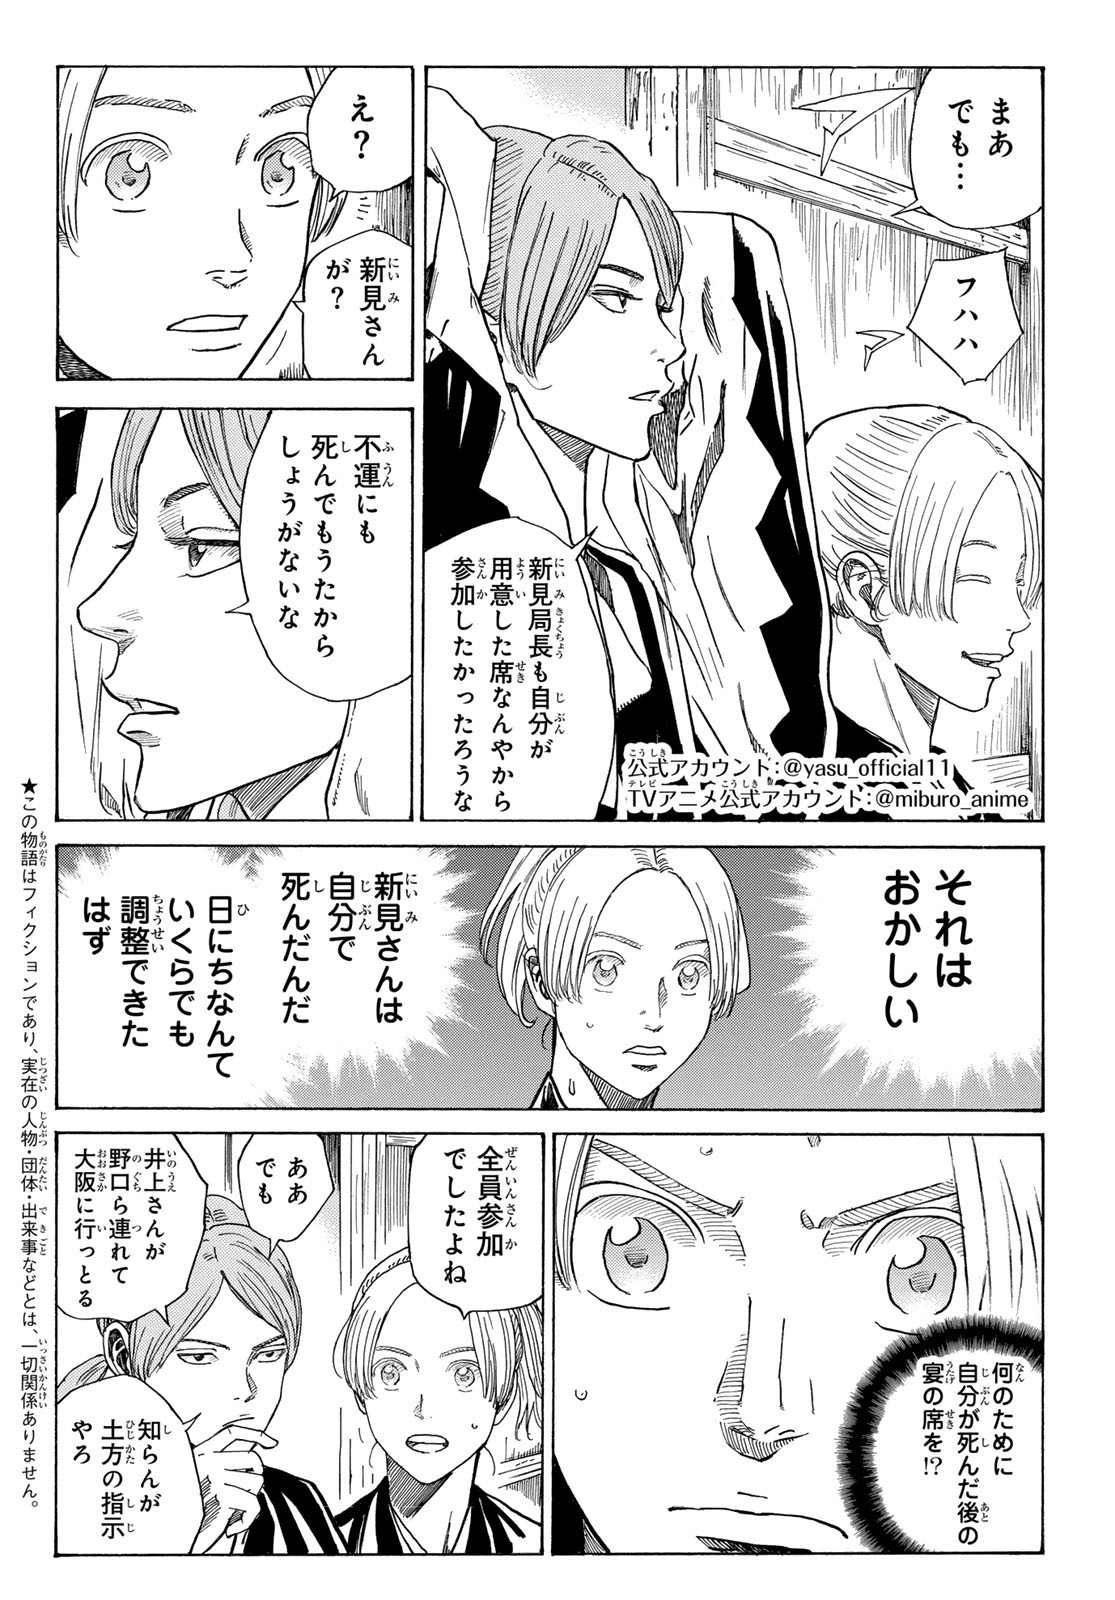 Ao no Miburo - Chapter 098 - Page 2